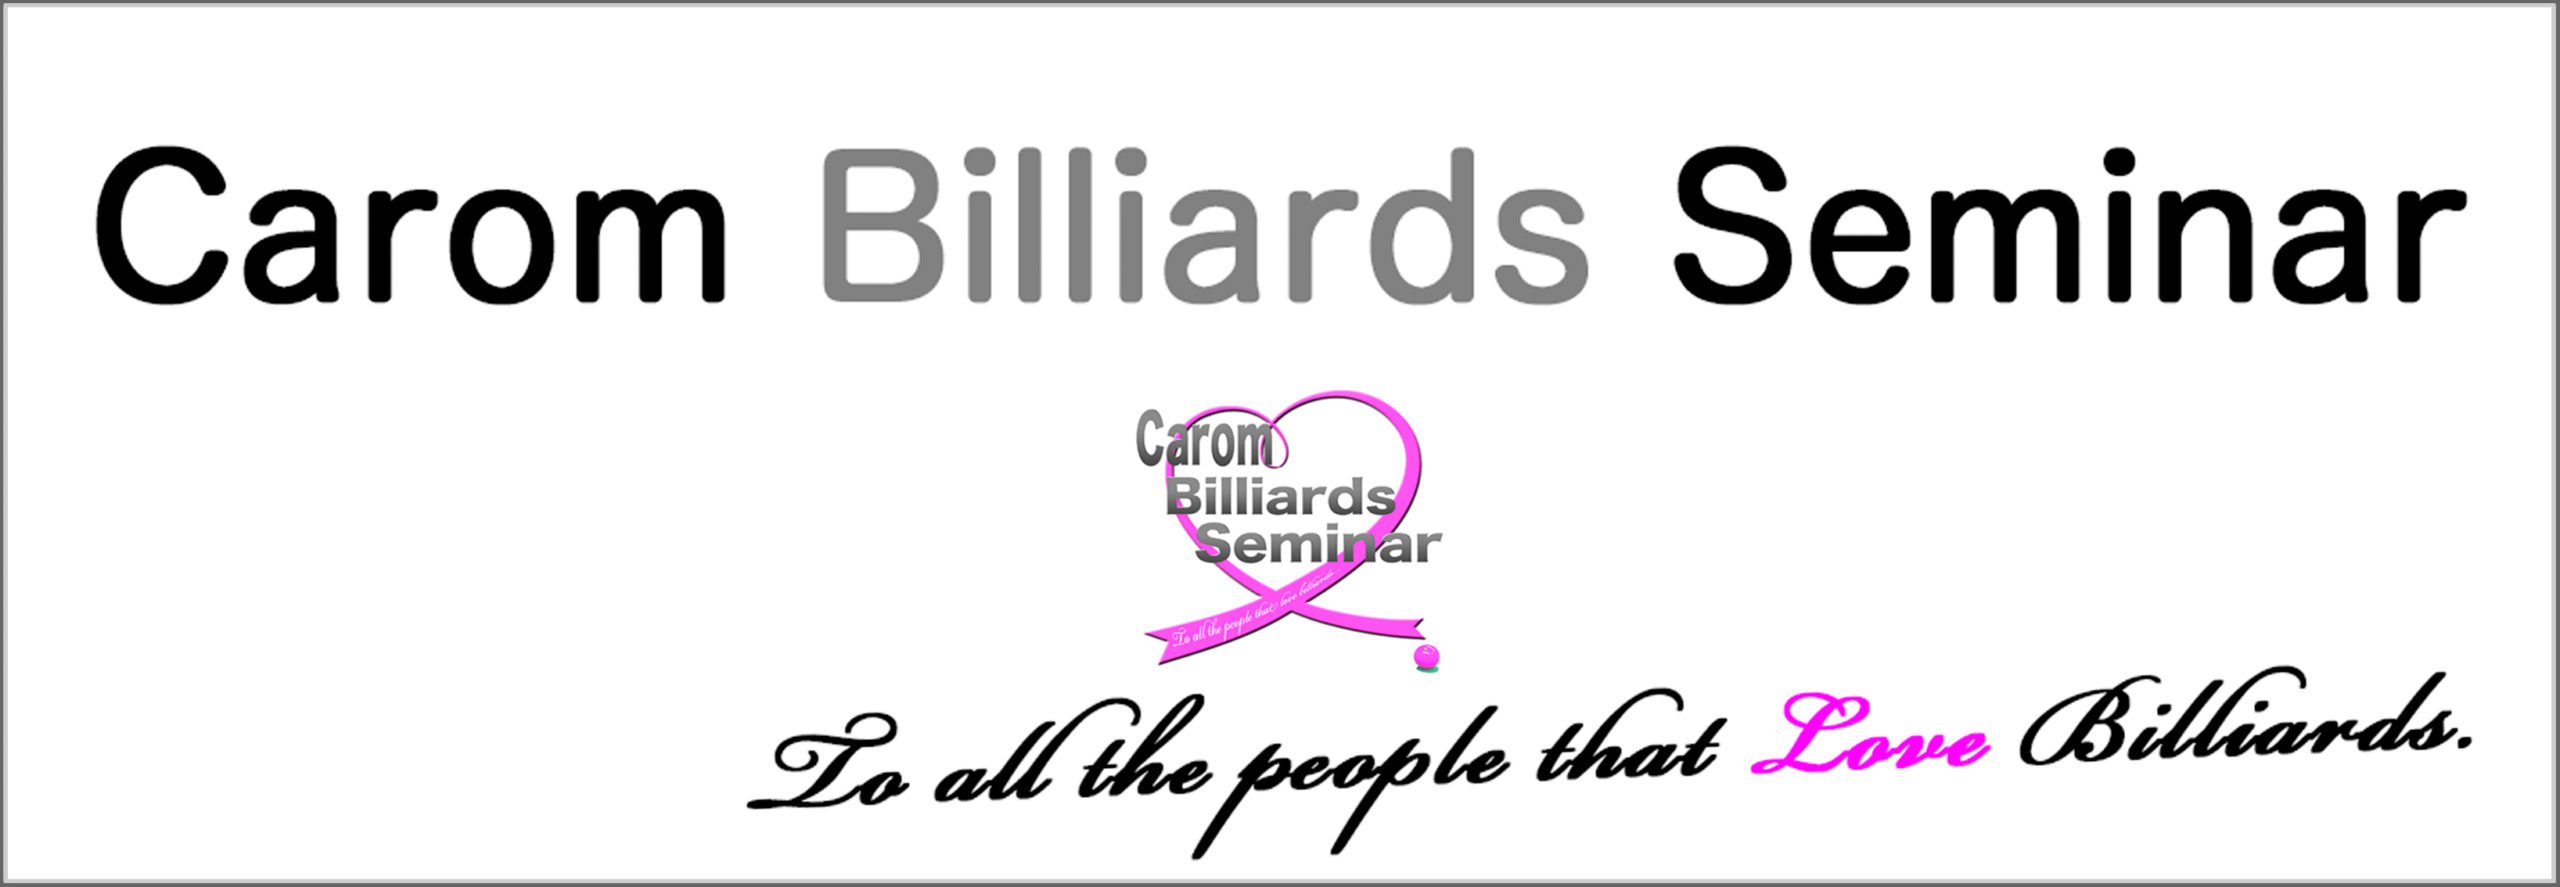 carom_billiards_seminar